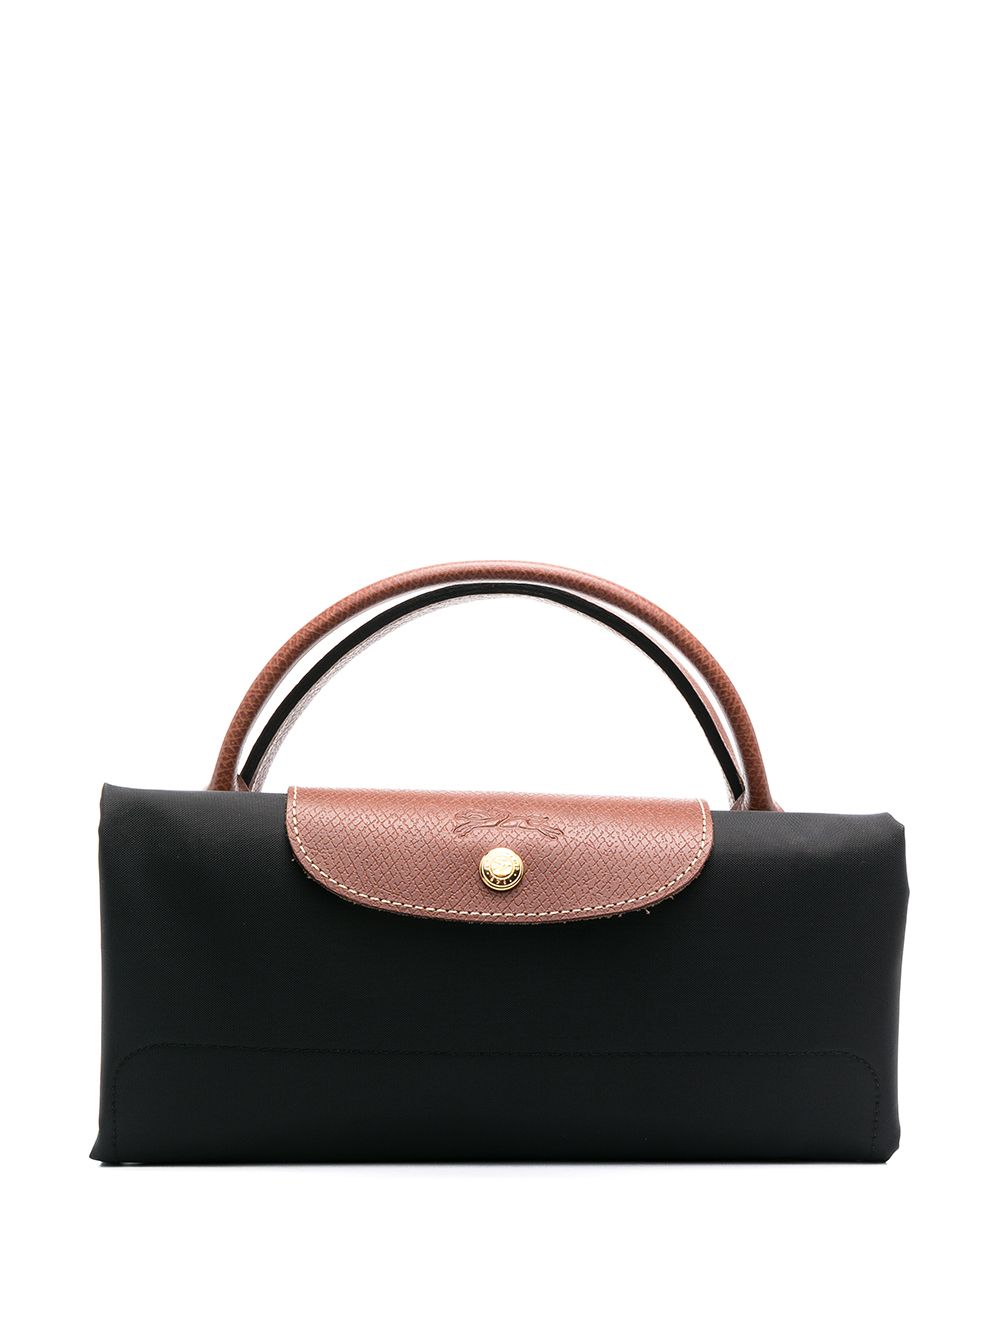 Buy Longchamp Le Pliage Large Travel Bag, Black, 17.75 x 13.75 x 9 at